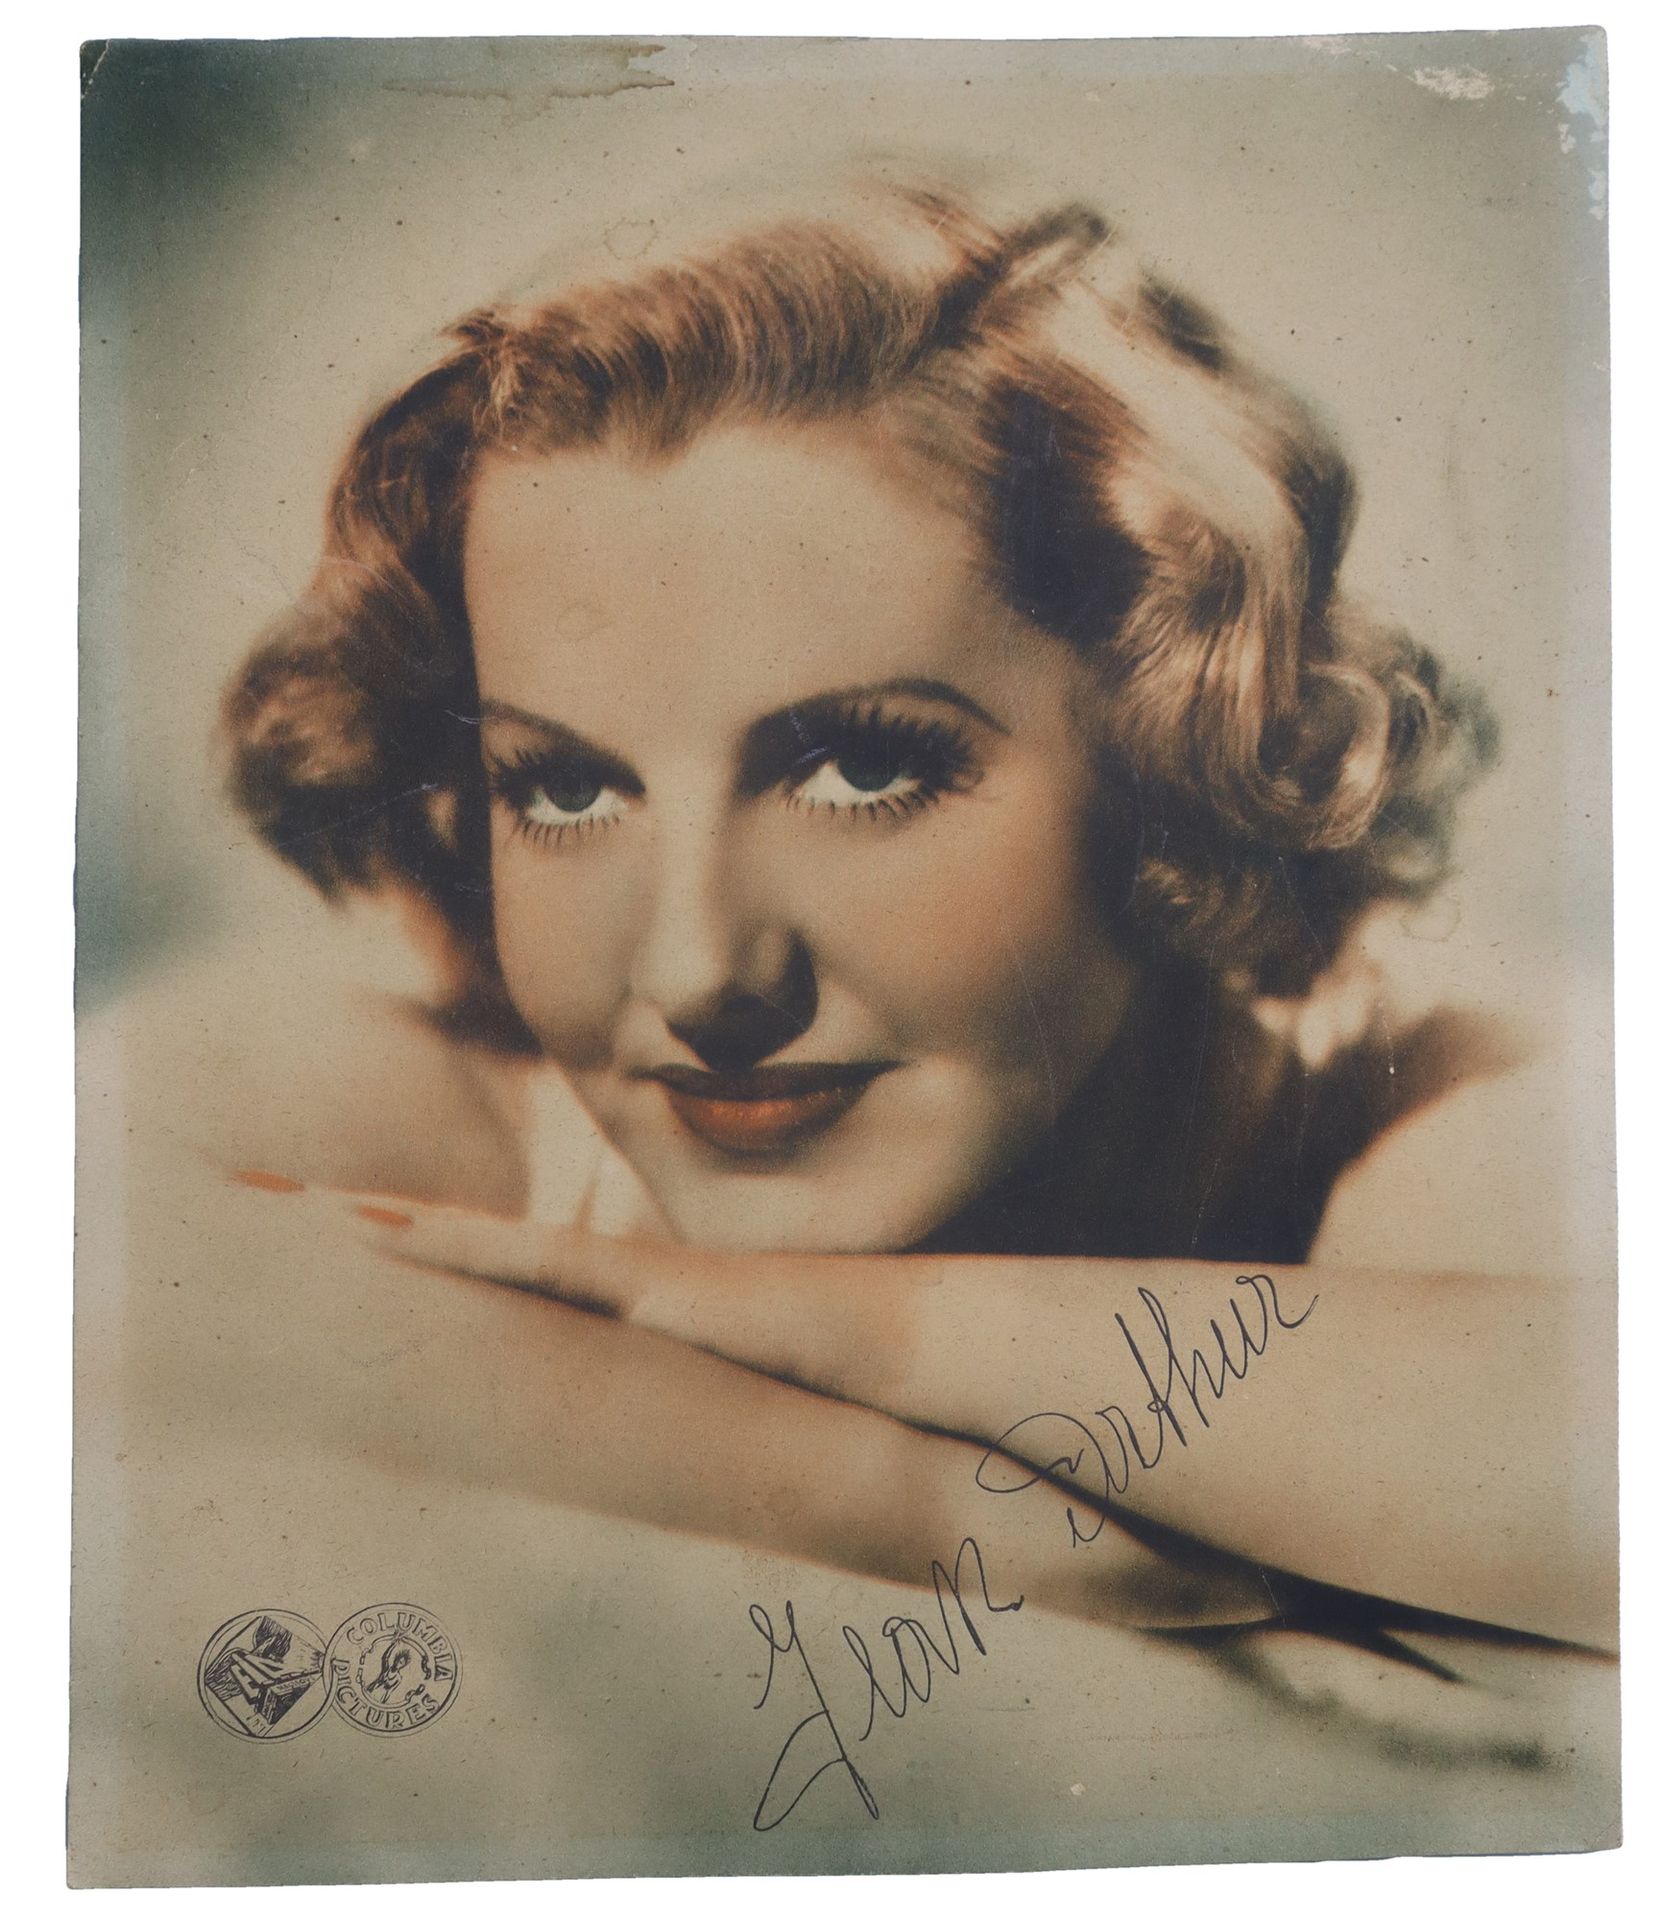 Null 静态照片Jean Arthur , 1930年代 32 cm x 25 cm Metro Goldwyn-Mayer, 使用痕迹正常